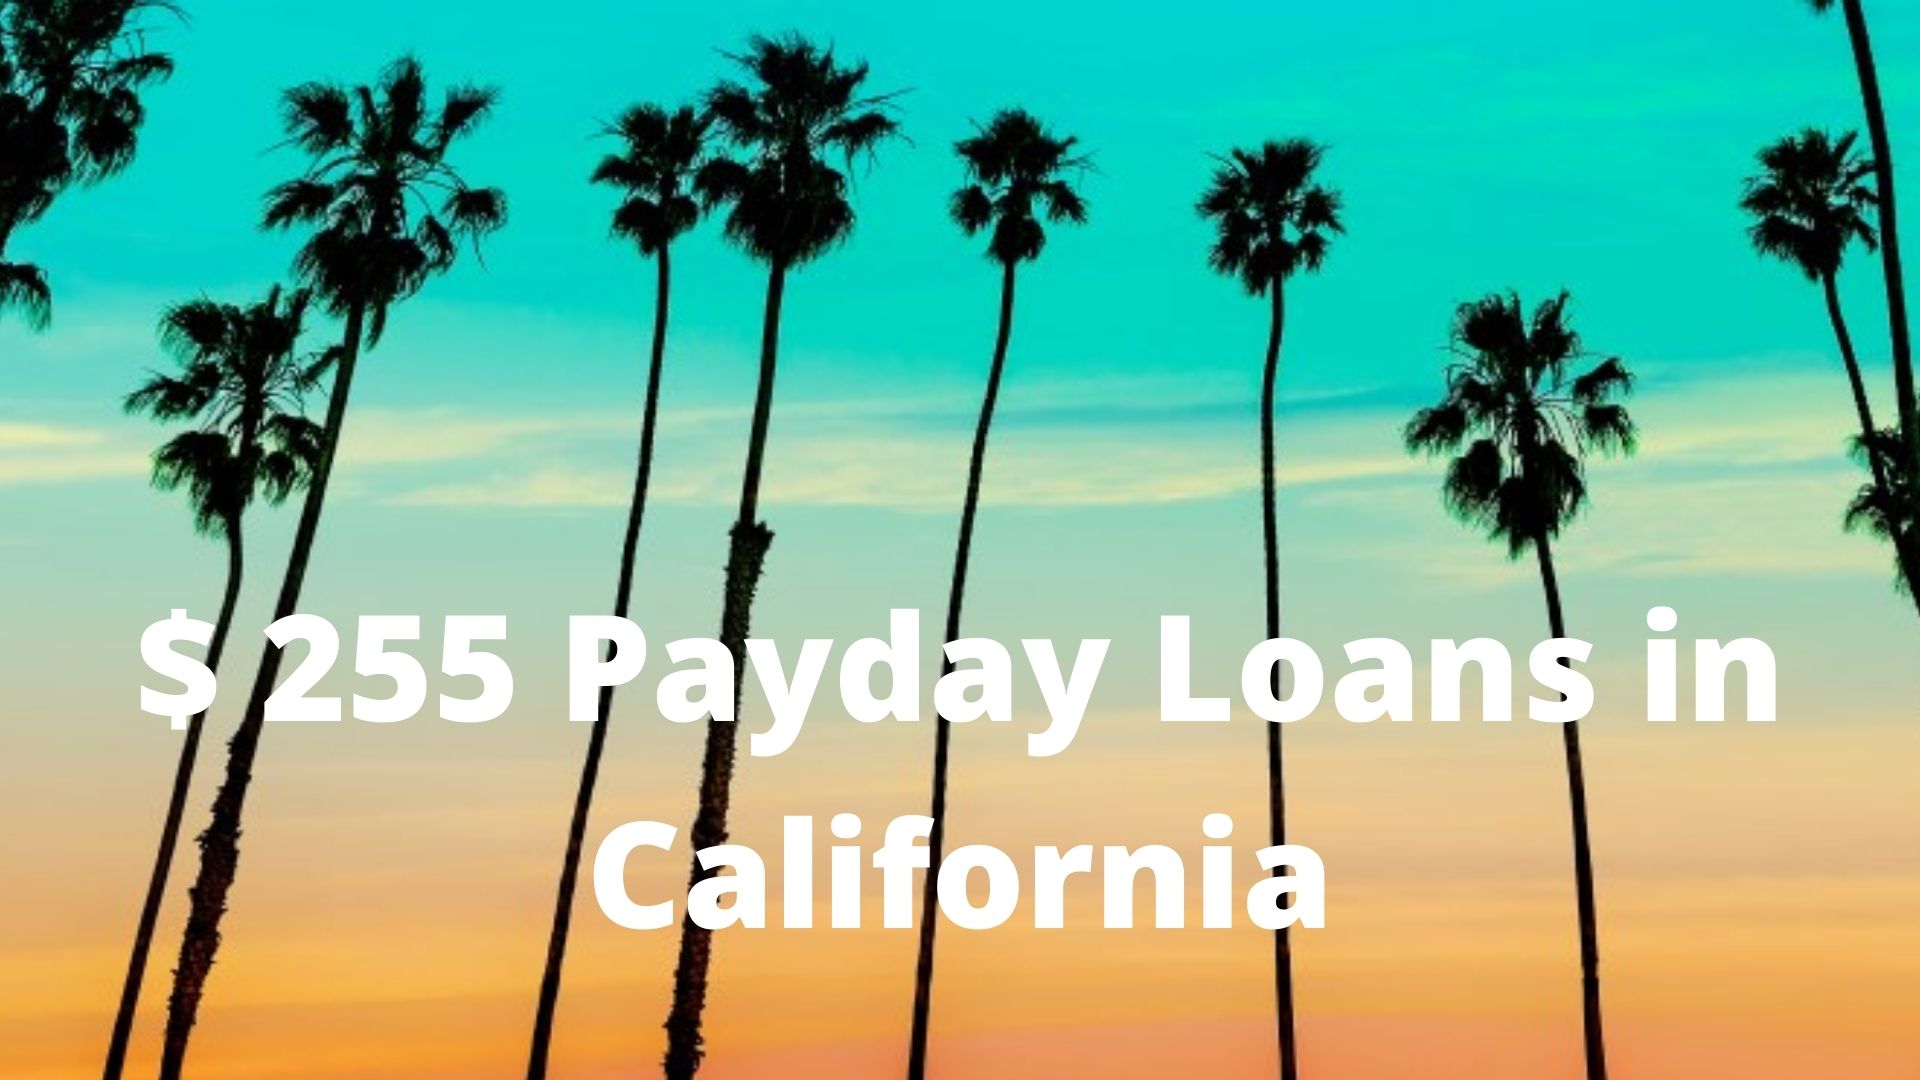 $ 255 Payday Loan in California